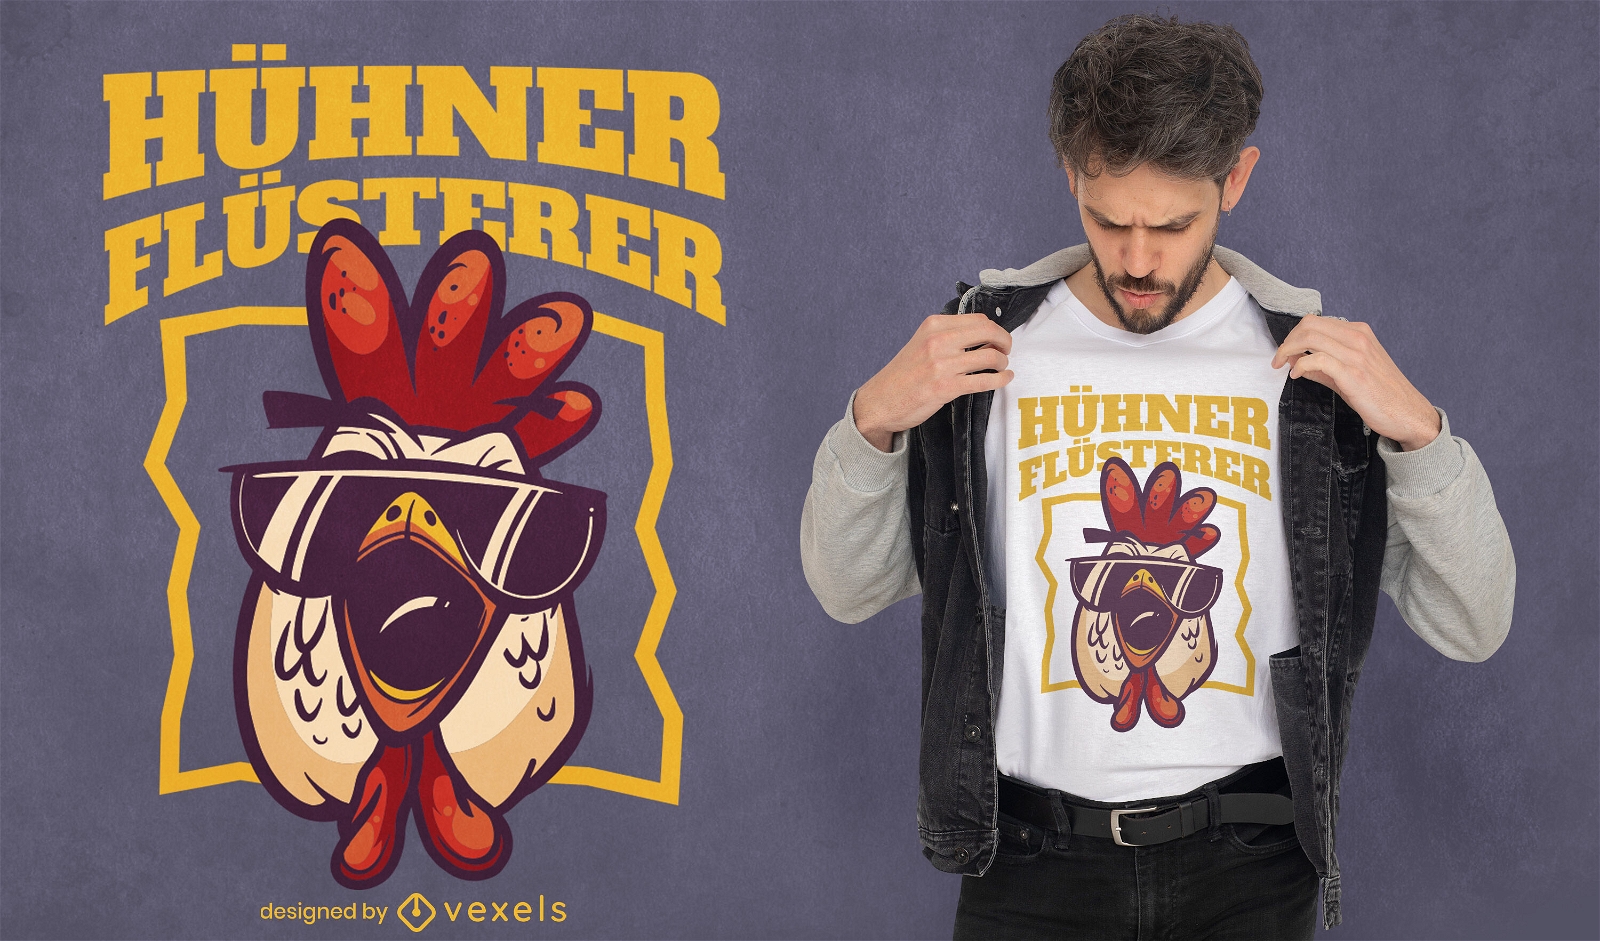 H?hnerfl?sterer-T-Shirt-Design